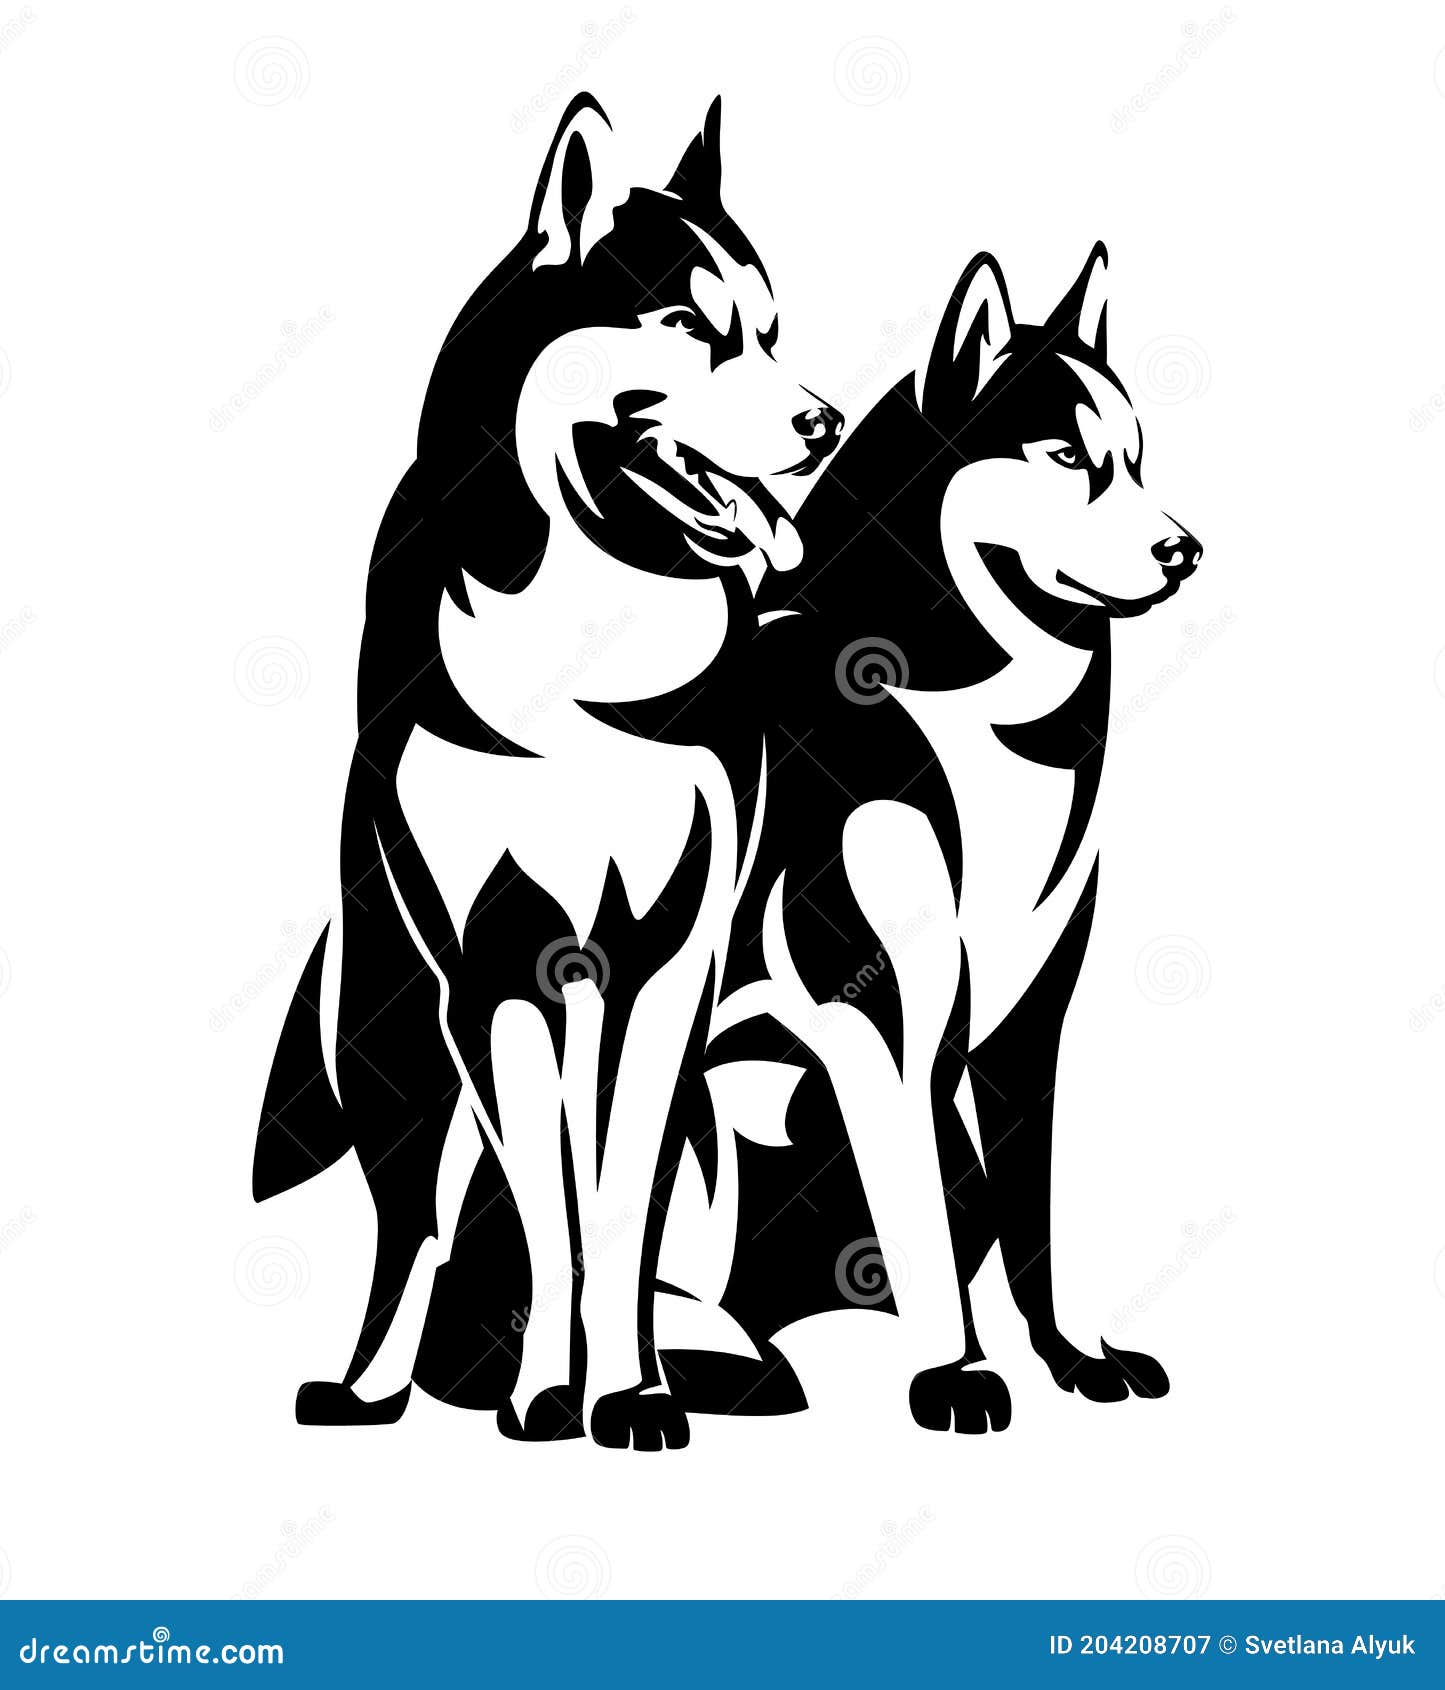 Group Of Siberian Huskies. Black Dog Silhouette. Running, Standing ...